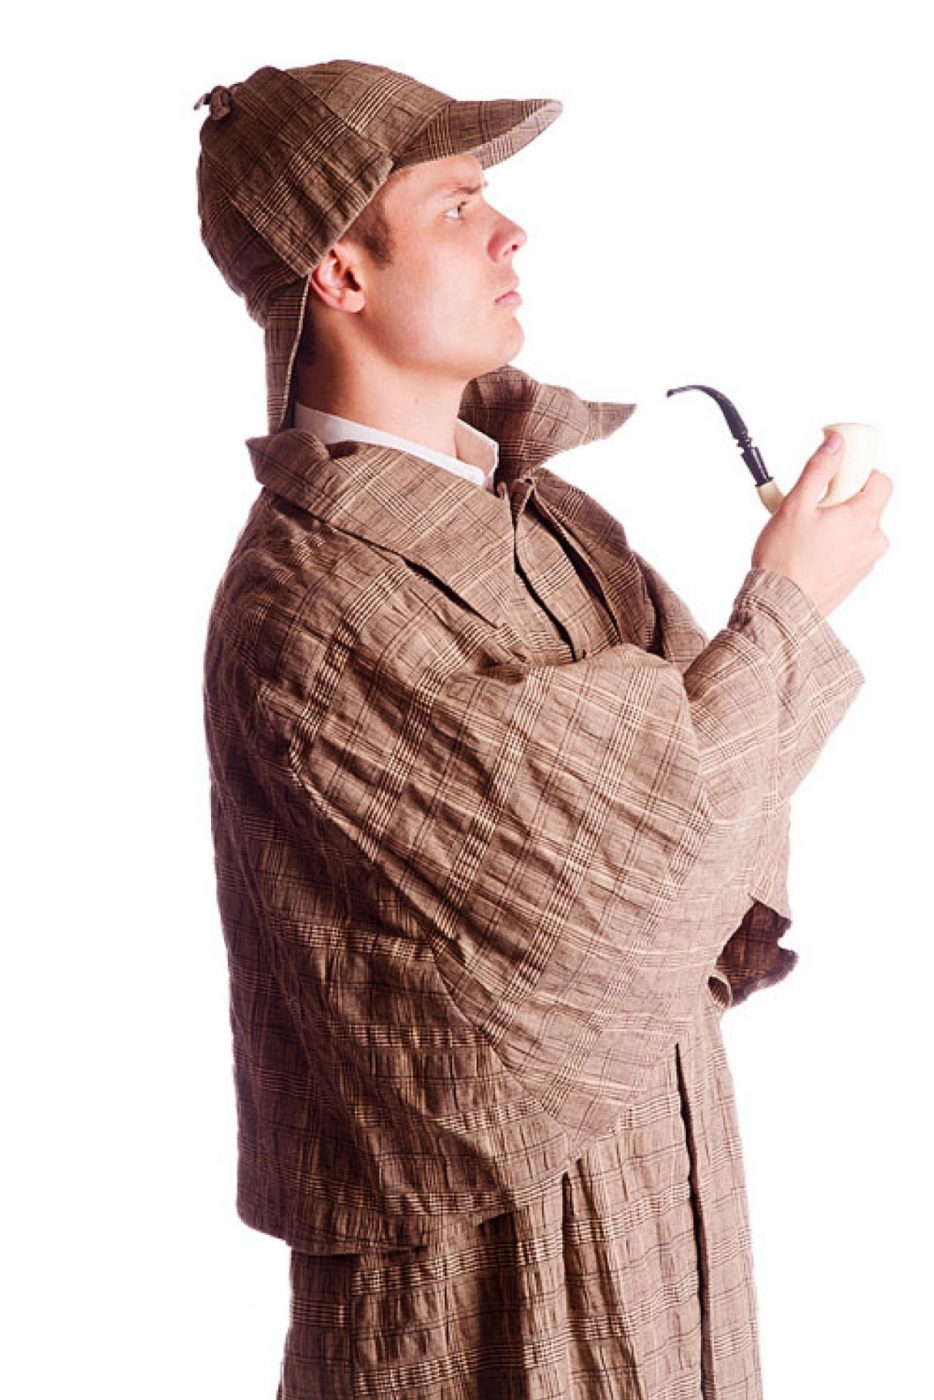 Detective Sherlock Holmes costume for man